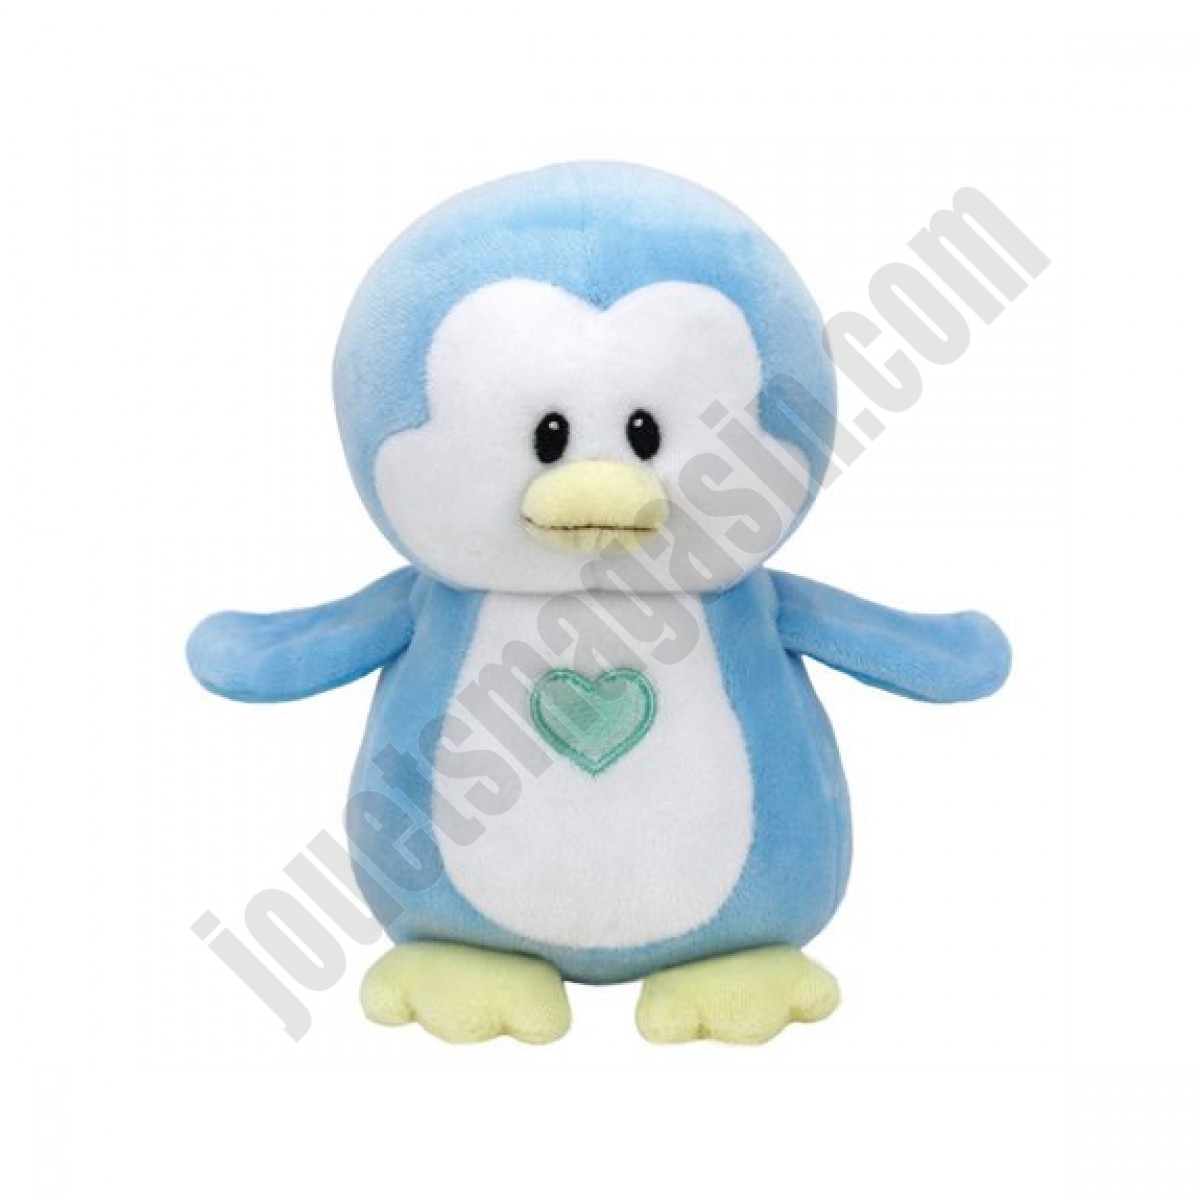 Baby Ty - Peluche Twinkles le Pingouin bleu 20 cm En promotion - Baby Ty - Peluche Twinkles le Pingouin bleu 20 cm En promotion